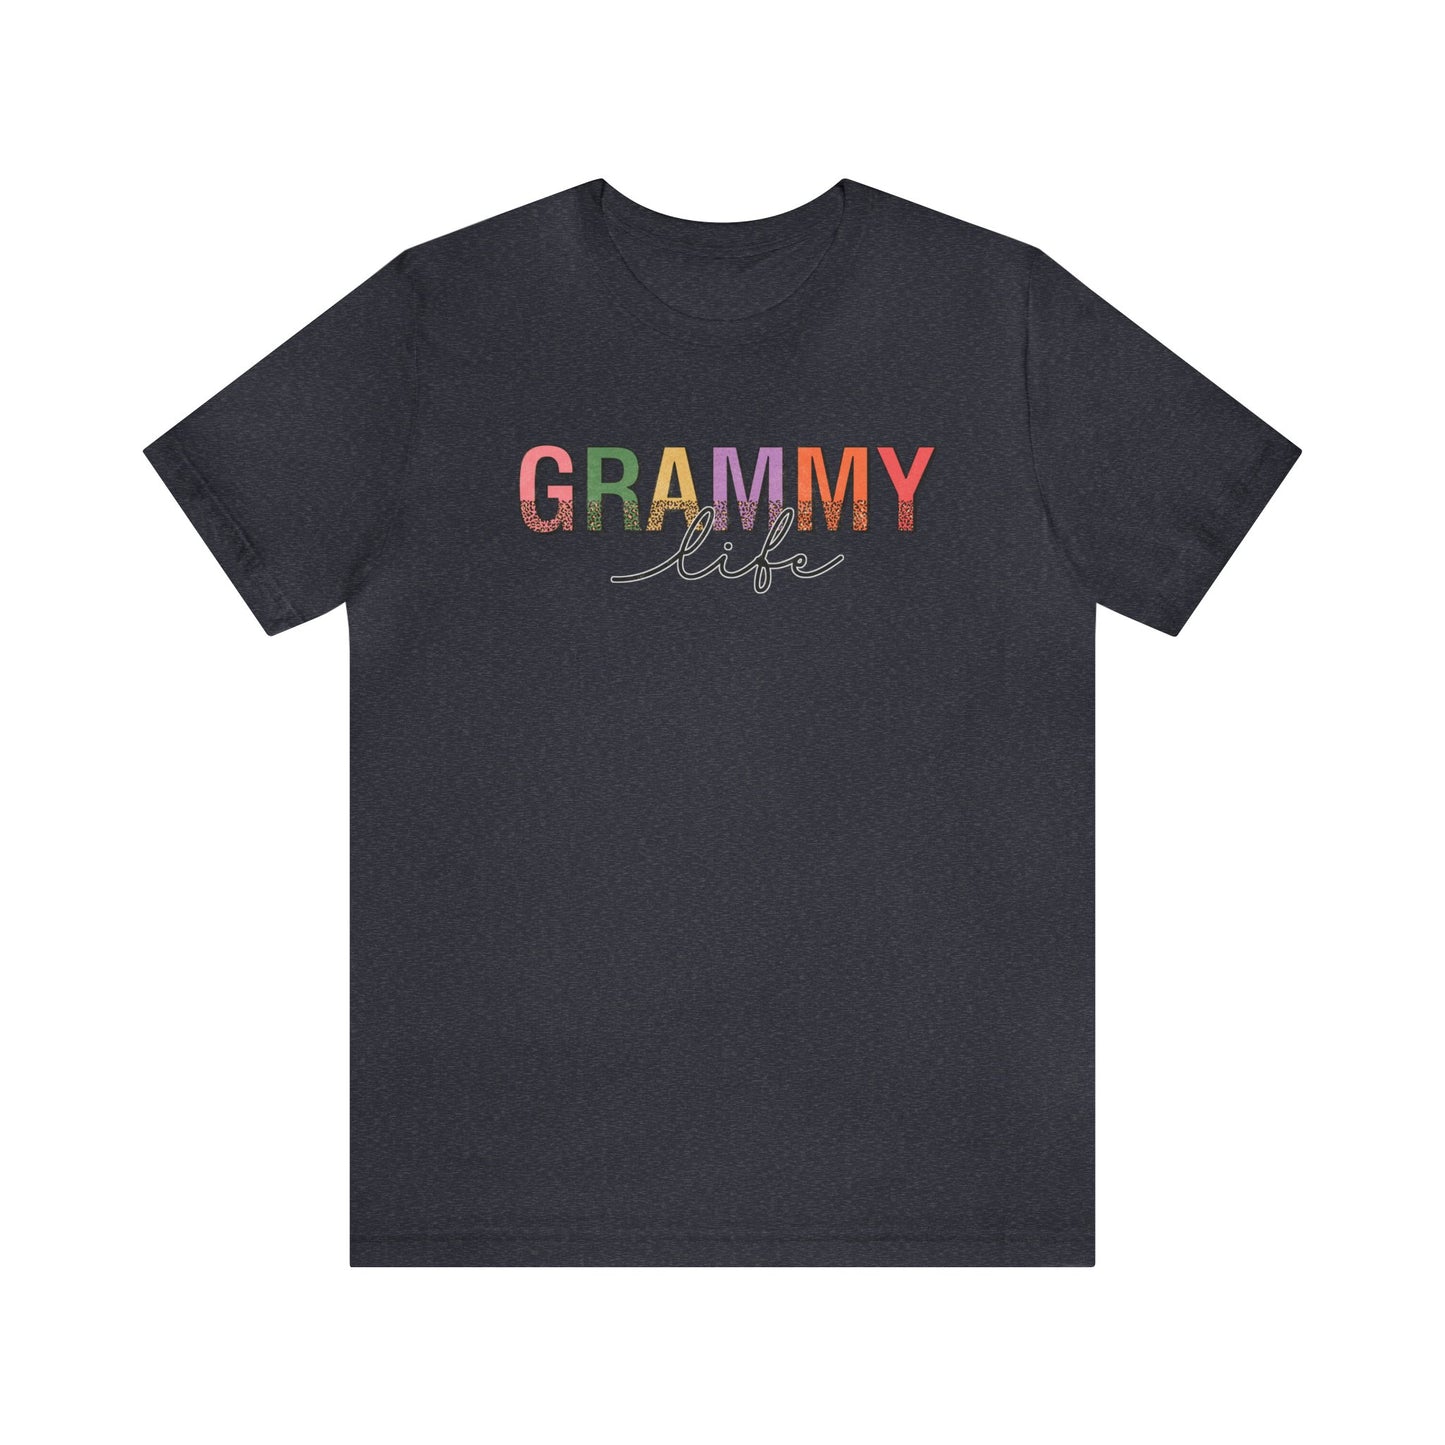 Grammy Life Women's Tshirt